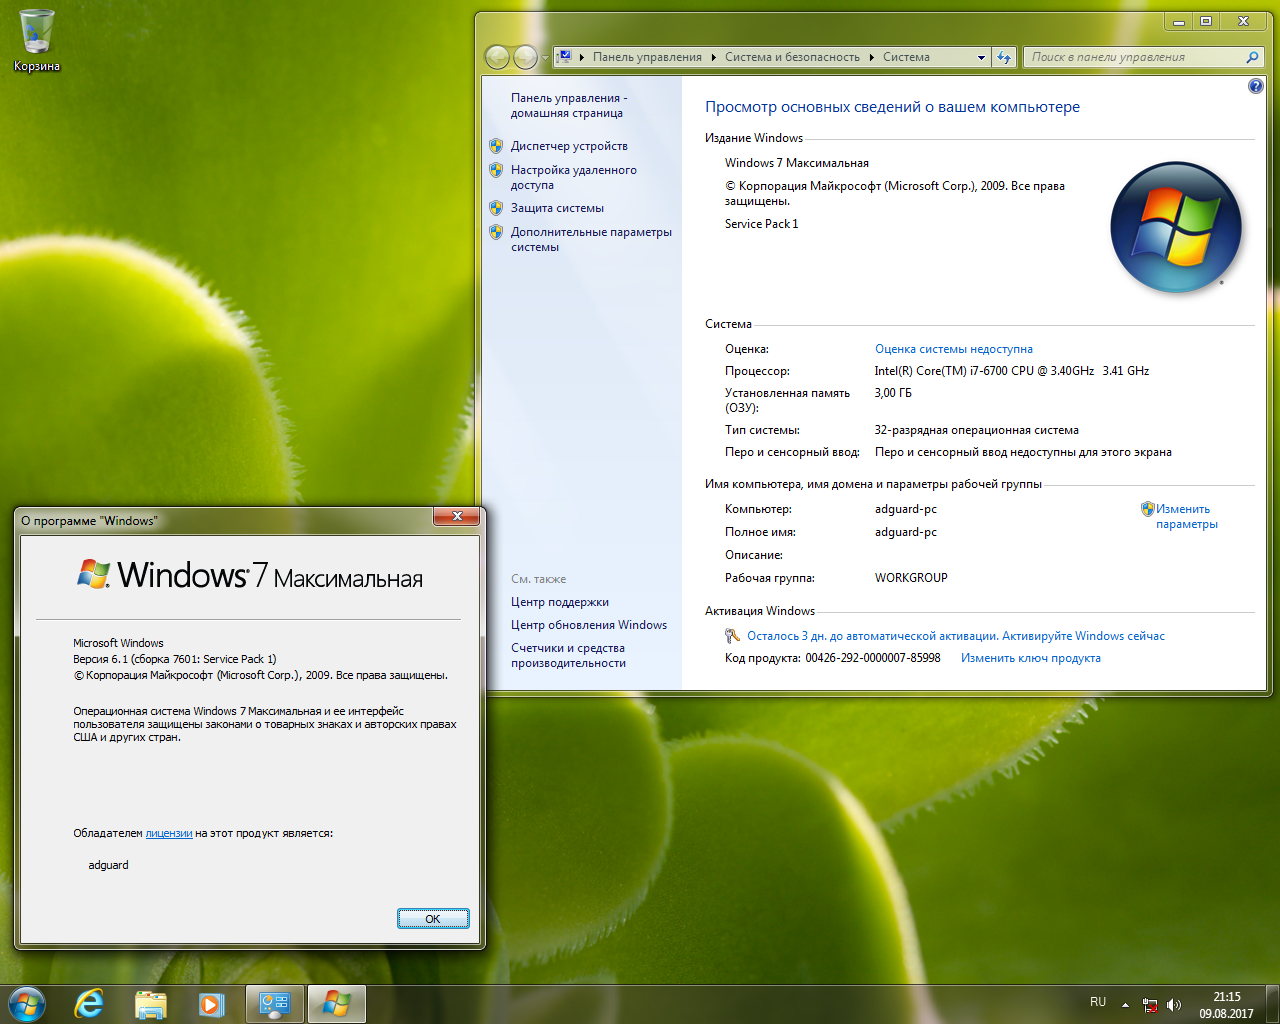 Ключ активации сборки 7601. Windows 7 максимальная. Windows 7 sp1 with update [7601.26321]. Сборка Windows 7 sp1 with update 7601.23862 AIO 26in2 Adguard (x86/x64).